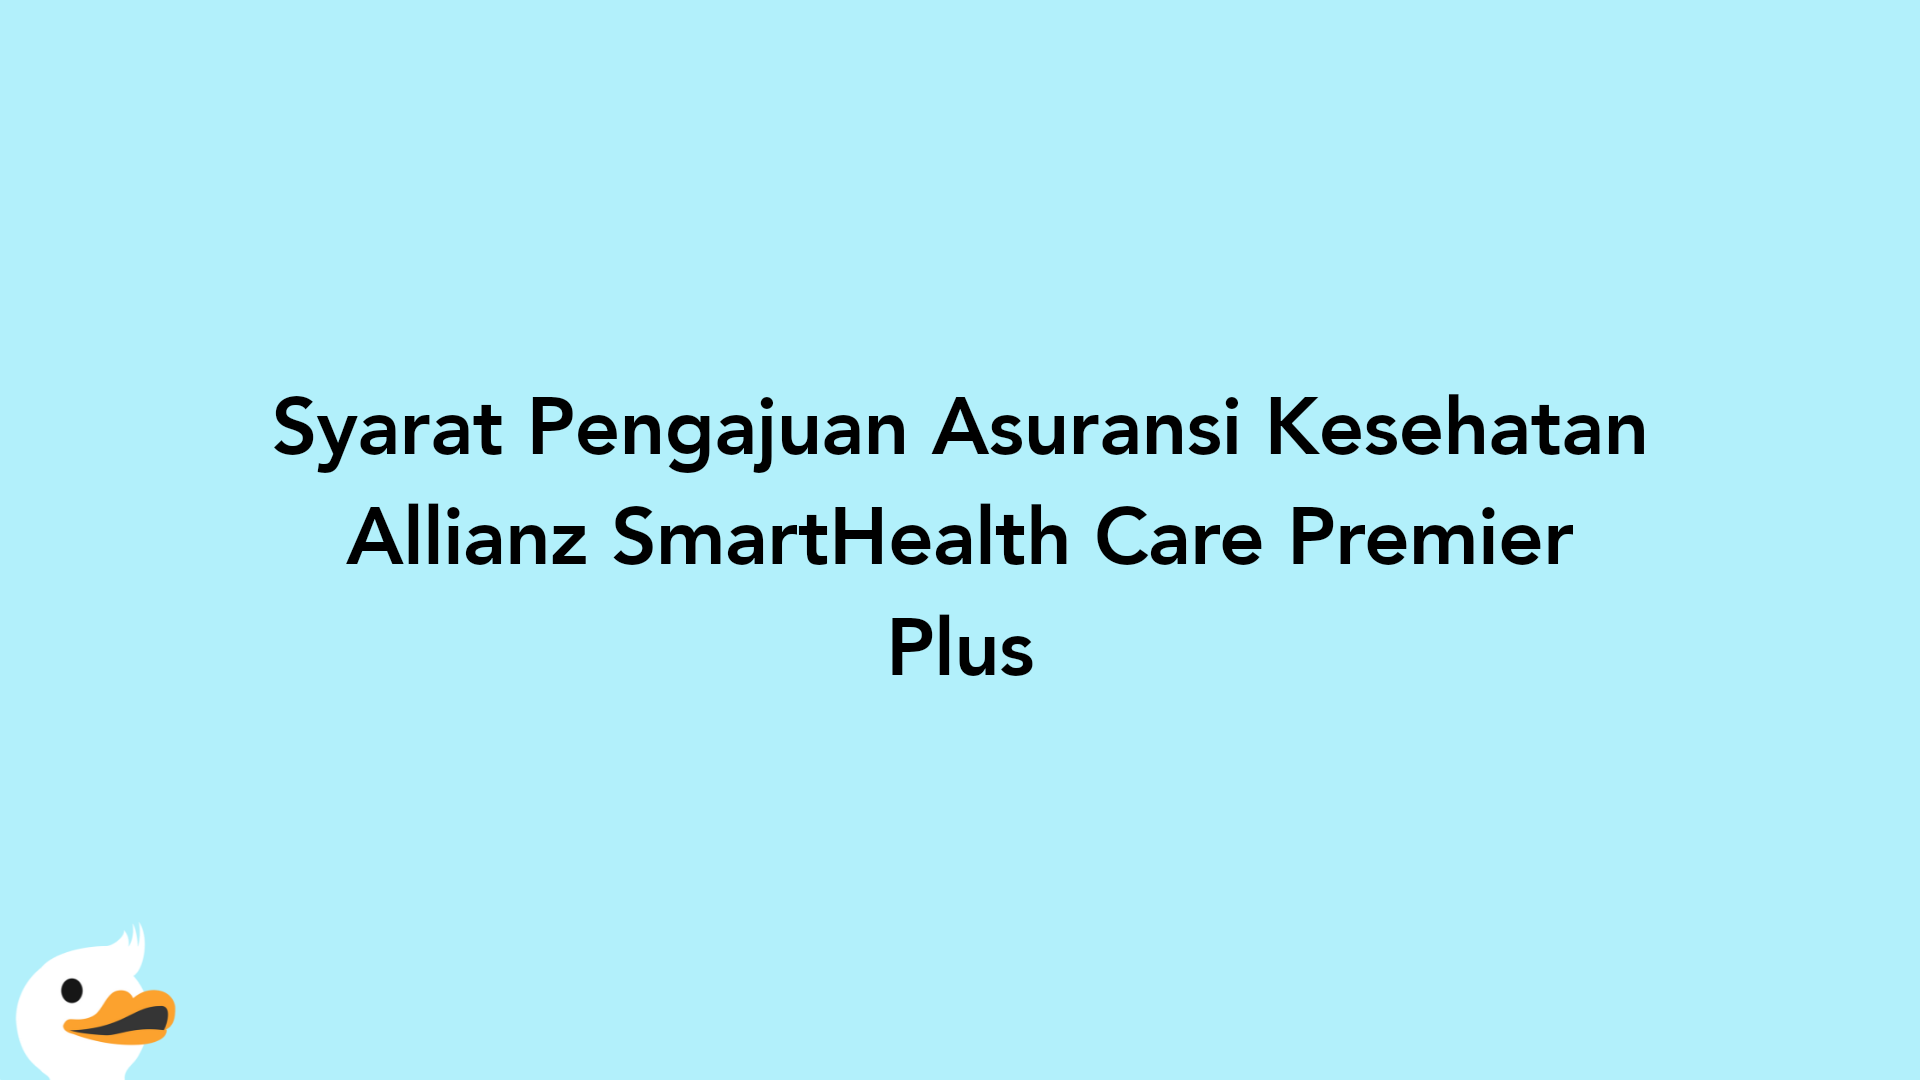 Syarat Pengajuan Asuransi Kesehatan Allianz SmartHealth Care Premier Plus